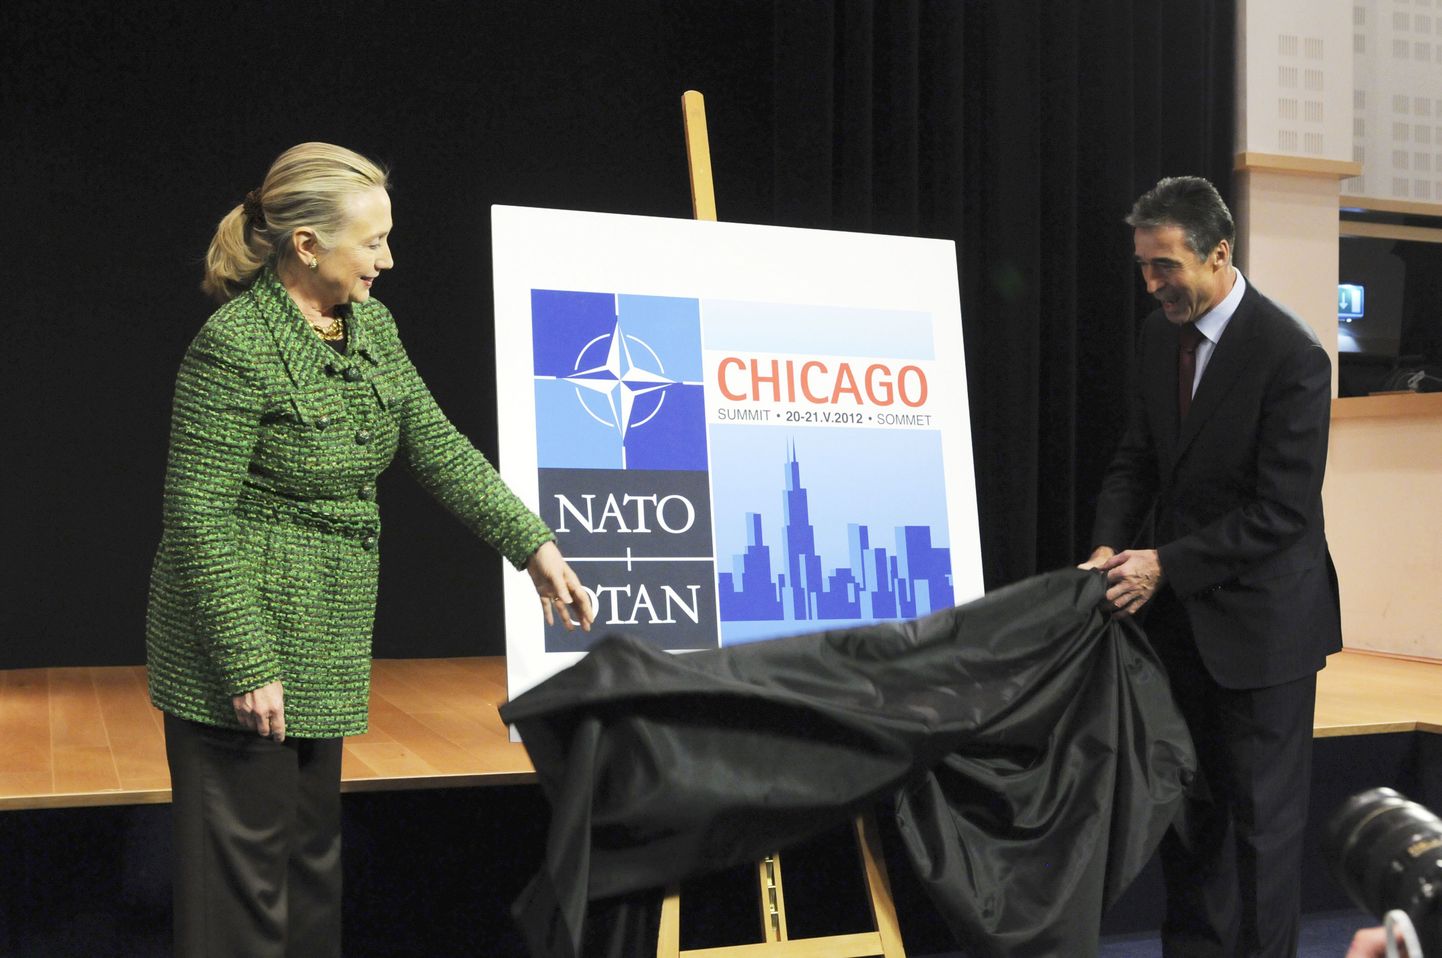 NATO peasekretär Anders Fogh Rasmussen ja USA välisminister Hillary Clinton võtmas katet Chicago tippkohtumise logolt.